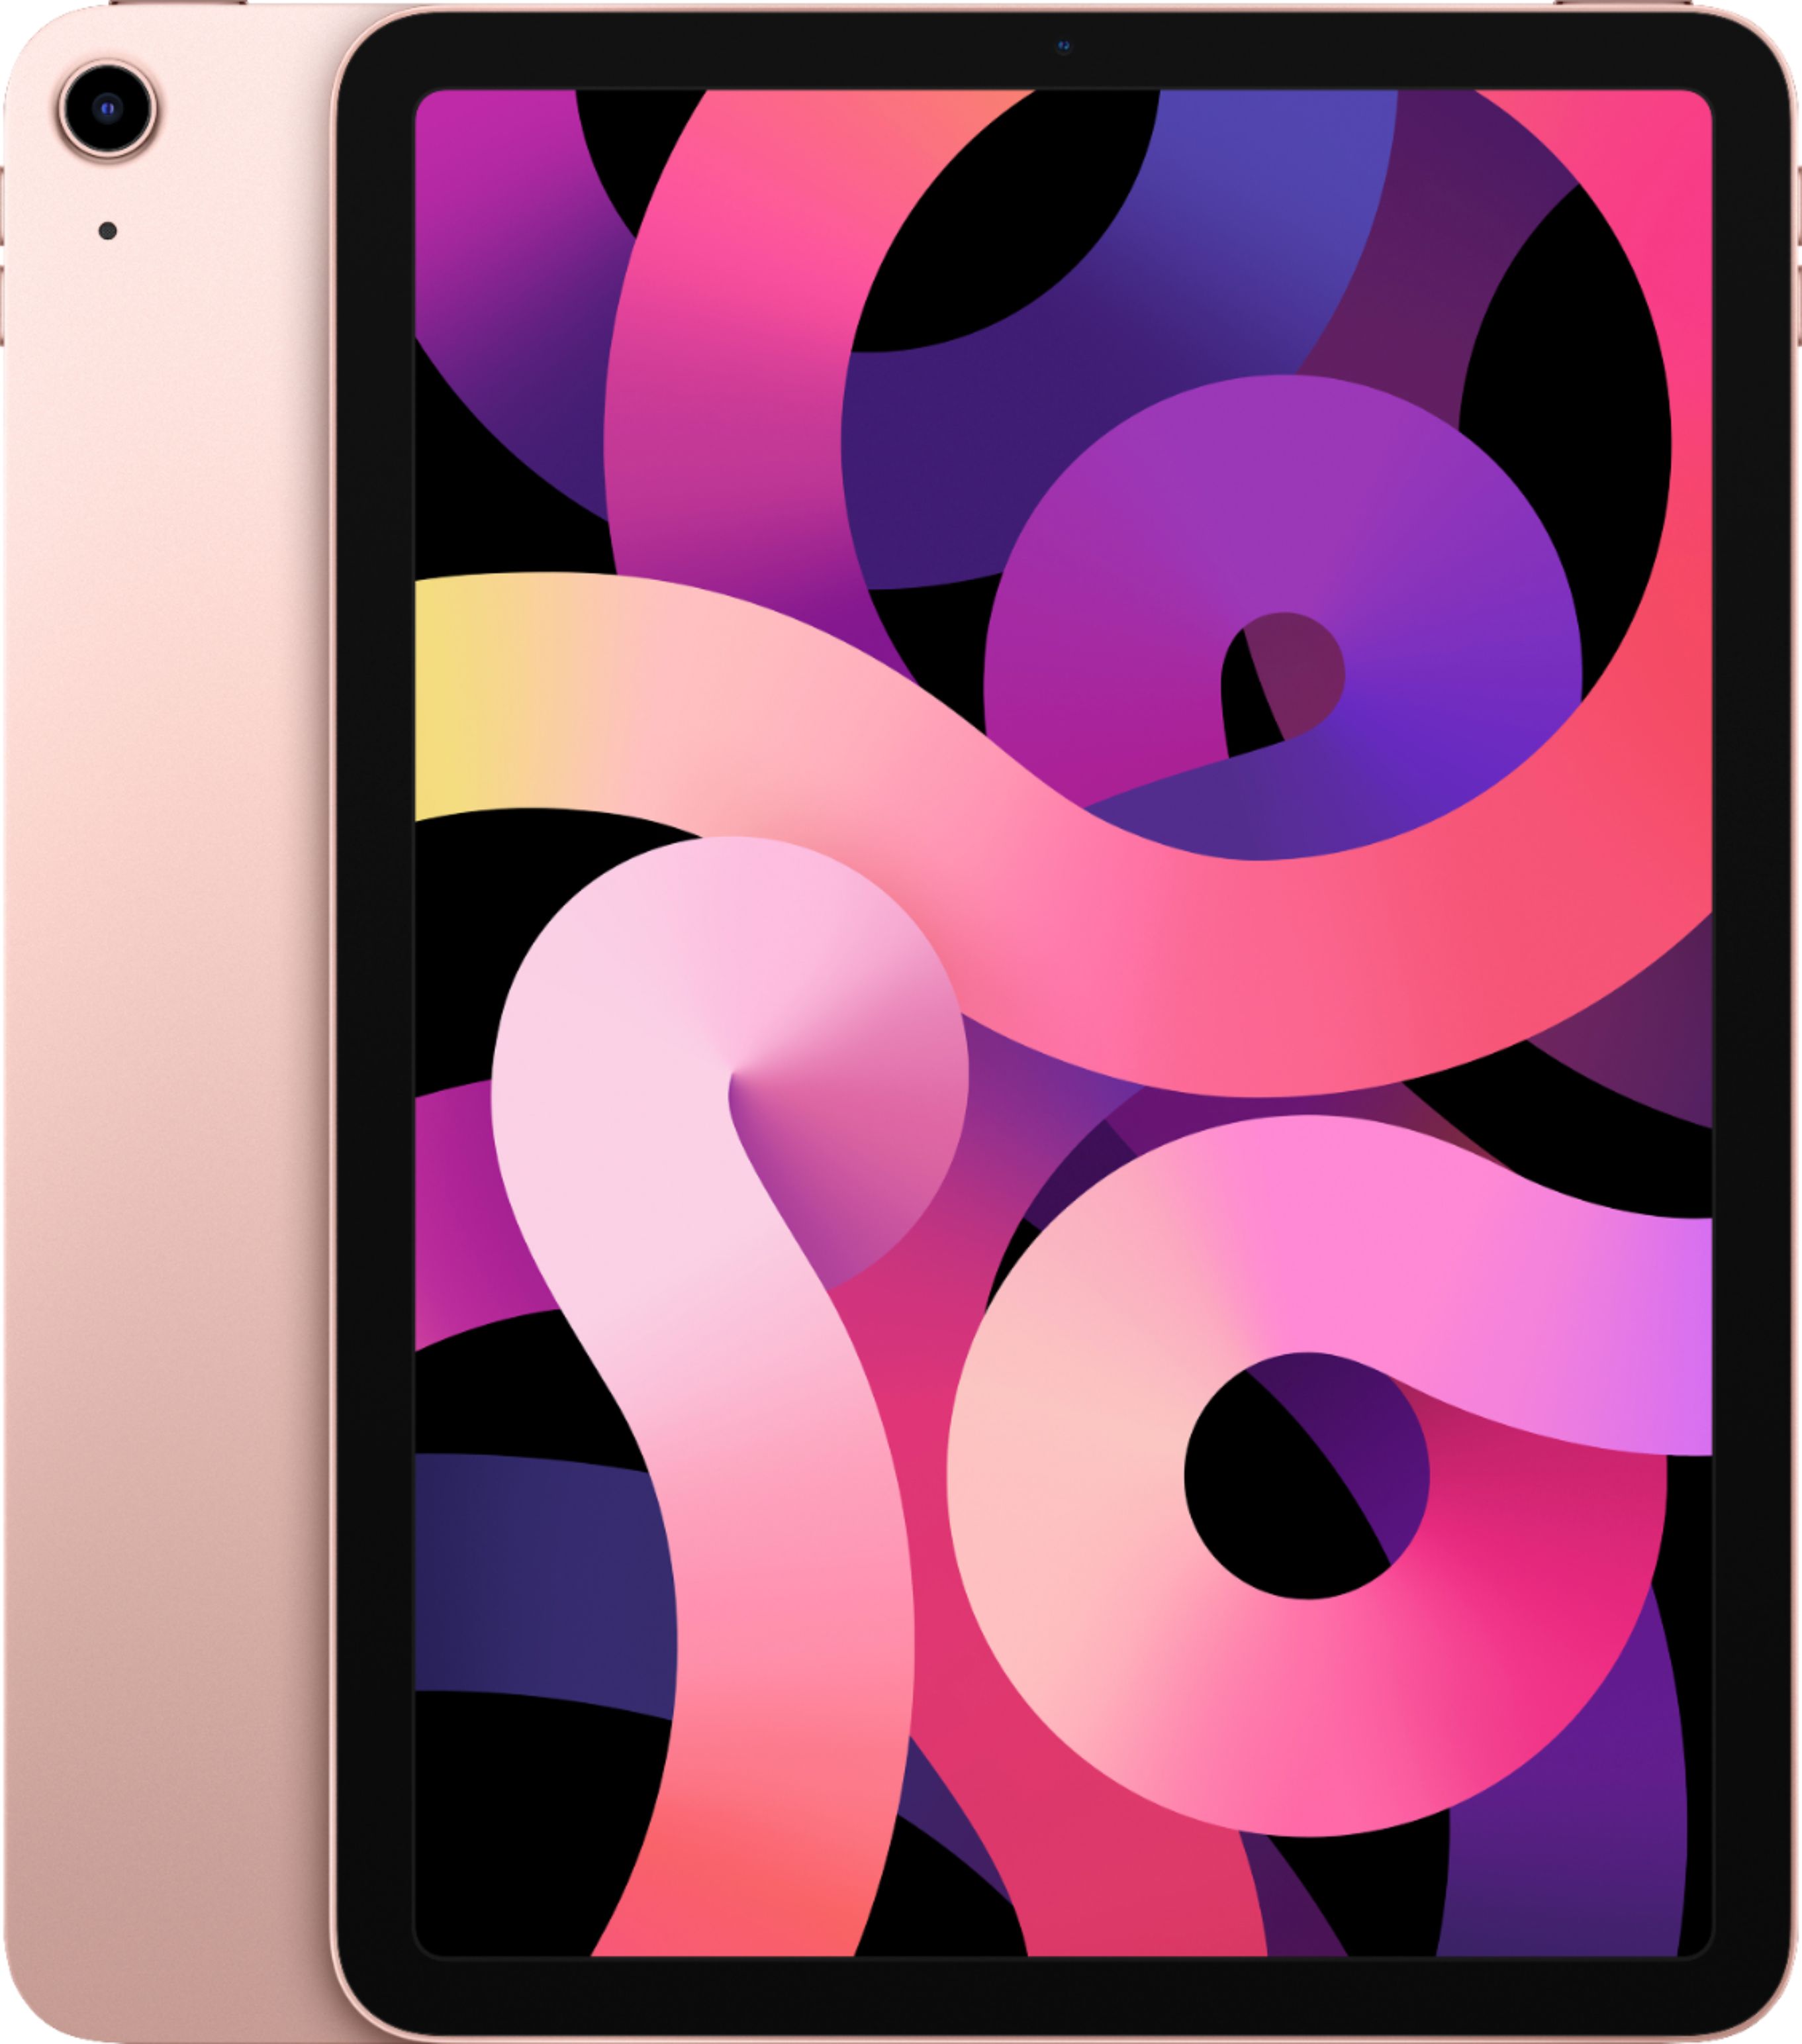 Apple - Geek Squad Certified Refurbished iPad Air with Wi-Fi - 64GB - Rose Gold